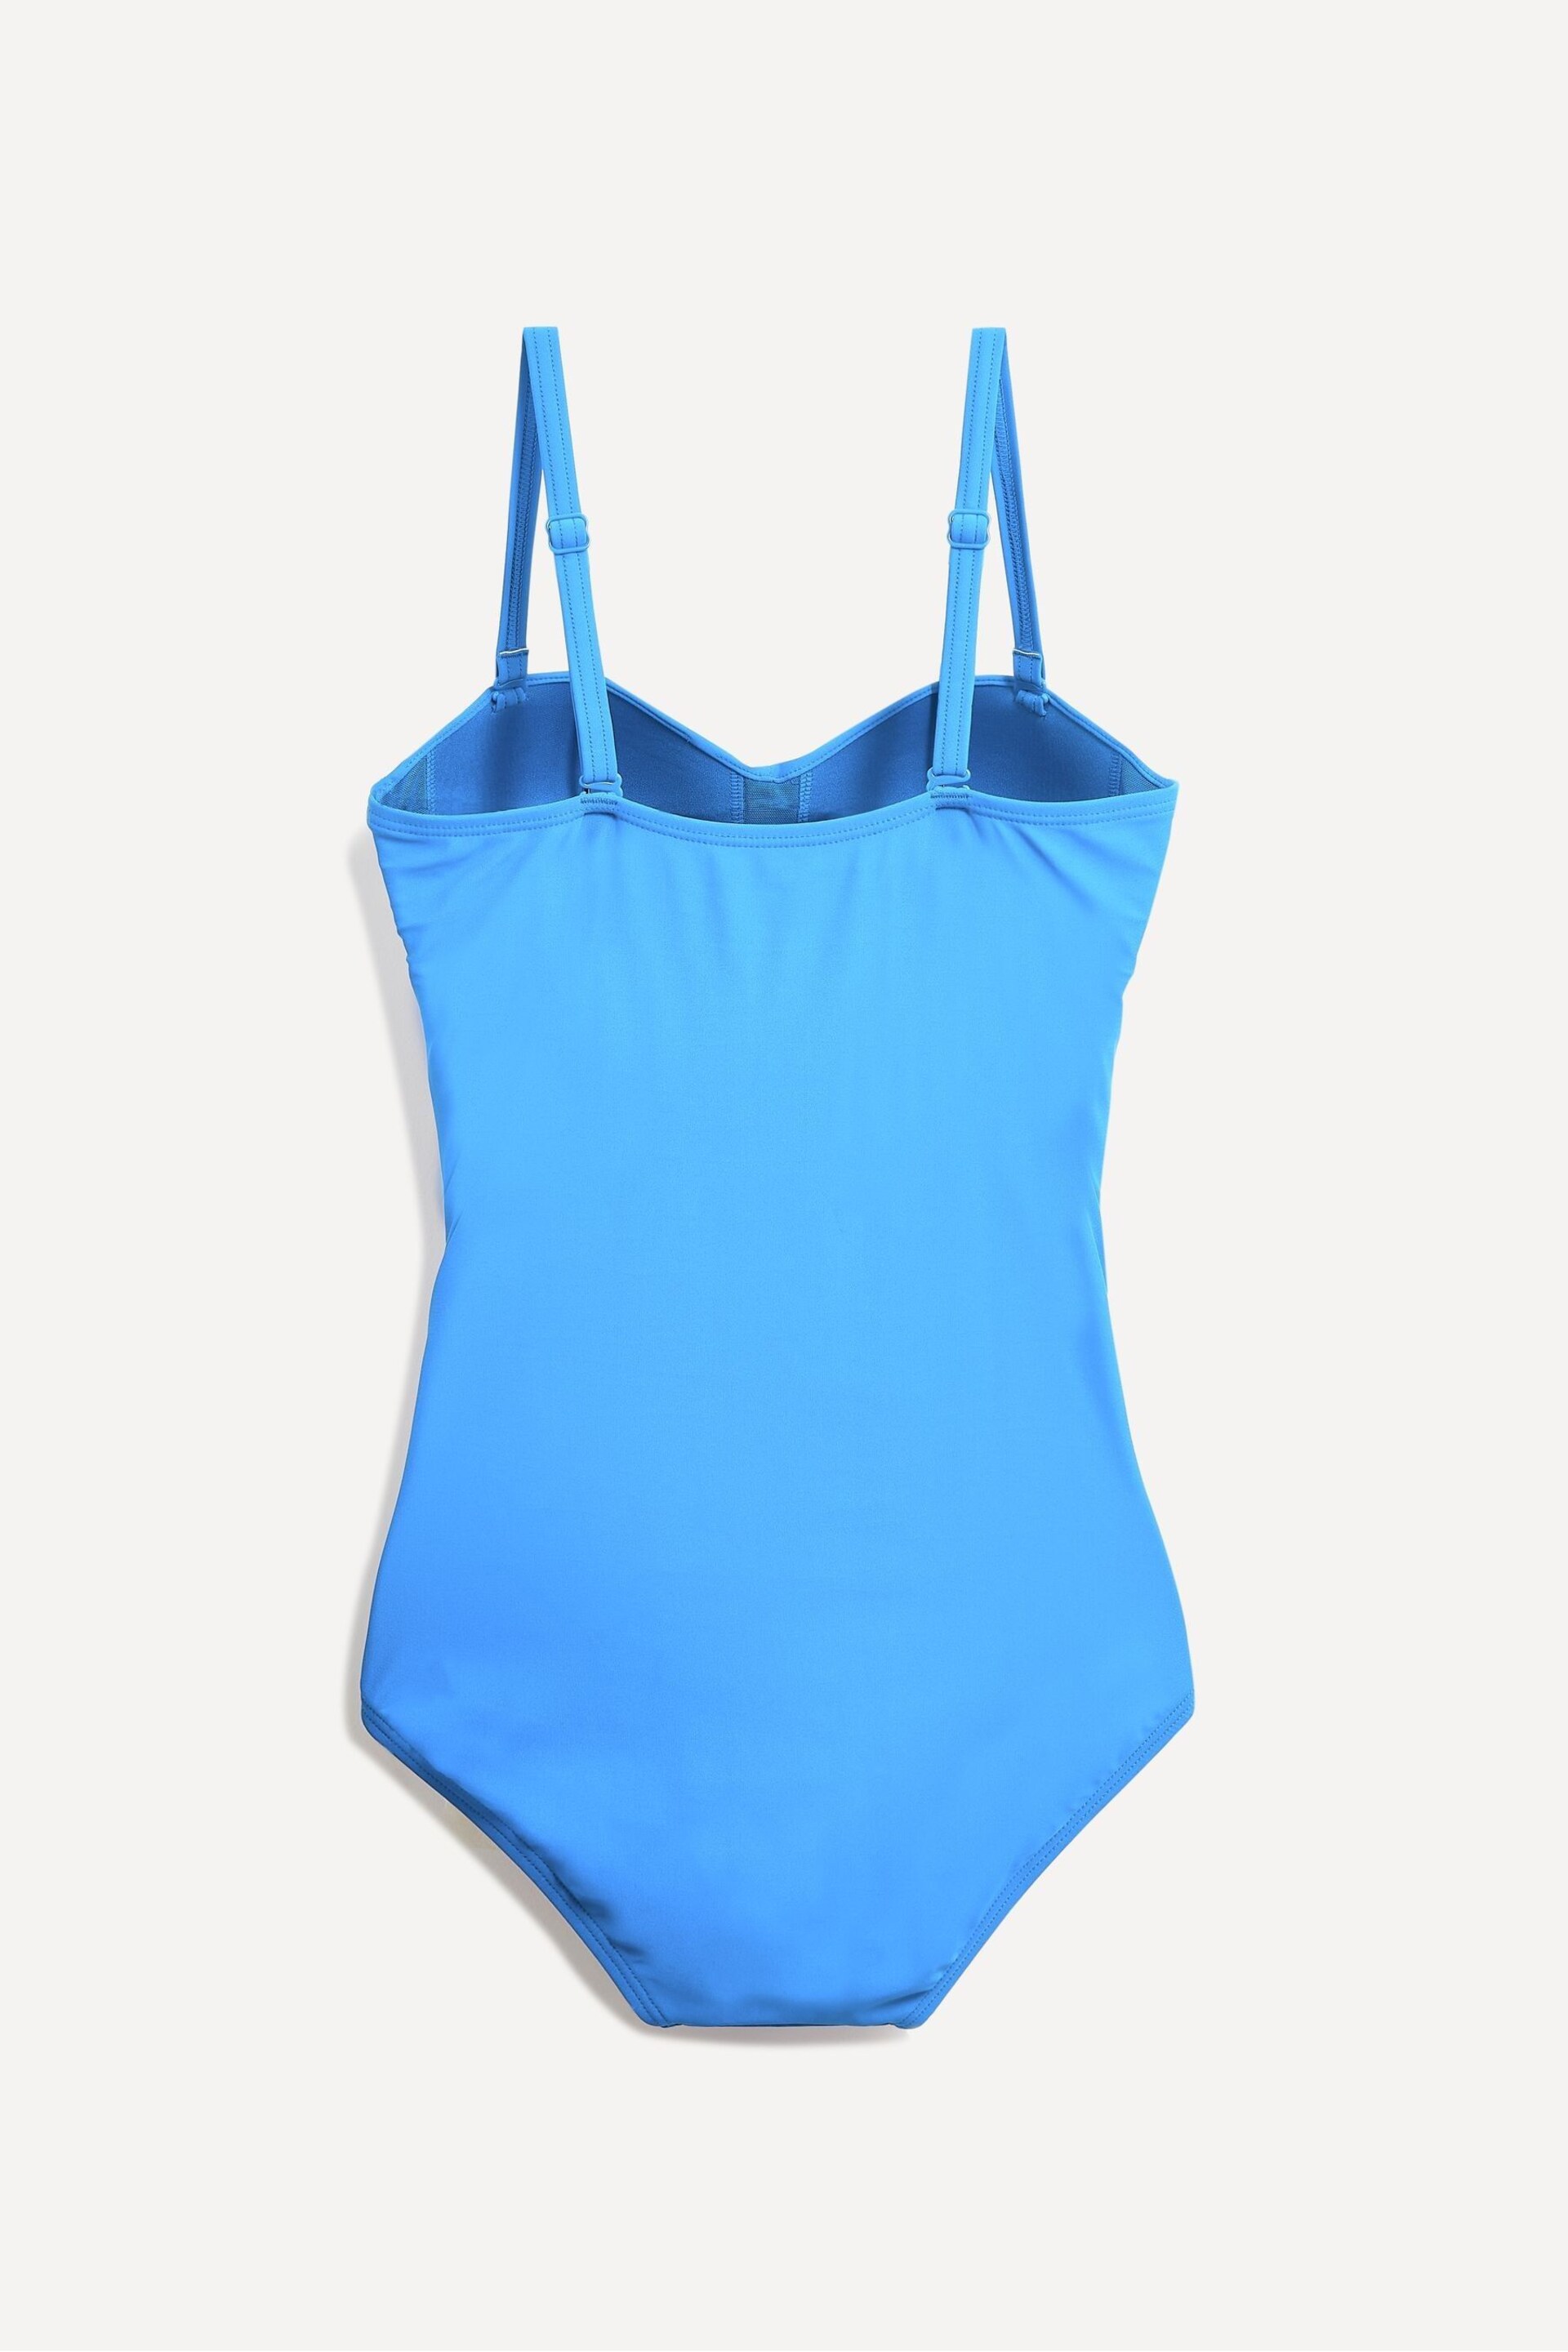 Linzi Blue Capri Bandeau Soft Cupped Tummy Control Swimsuit With Detachable Straps - Image 4 of 6